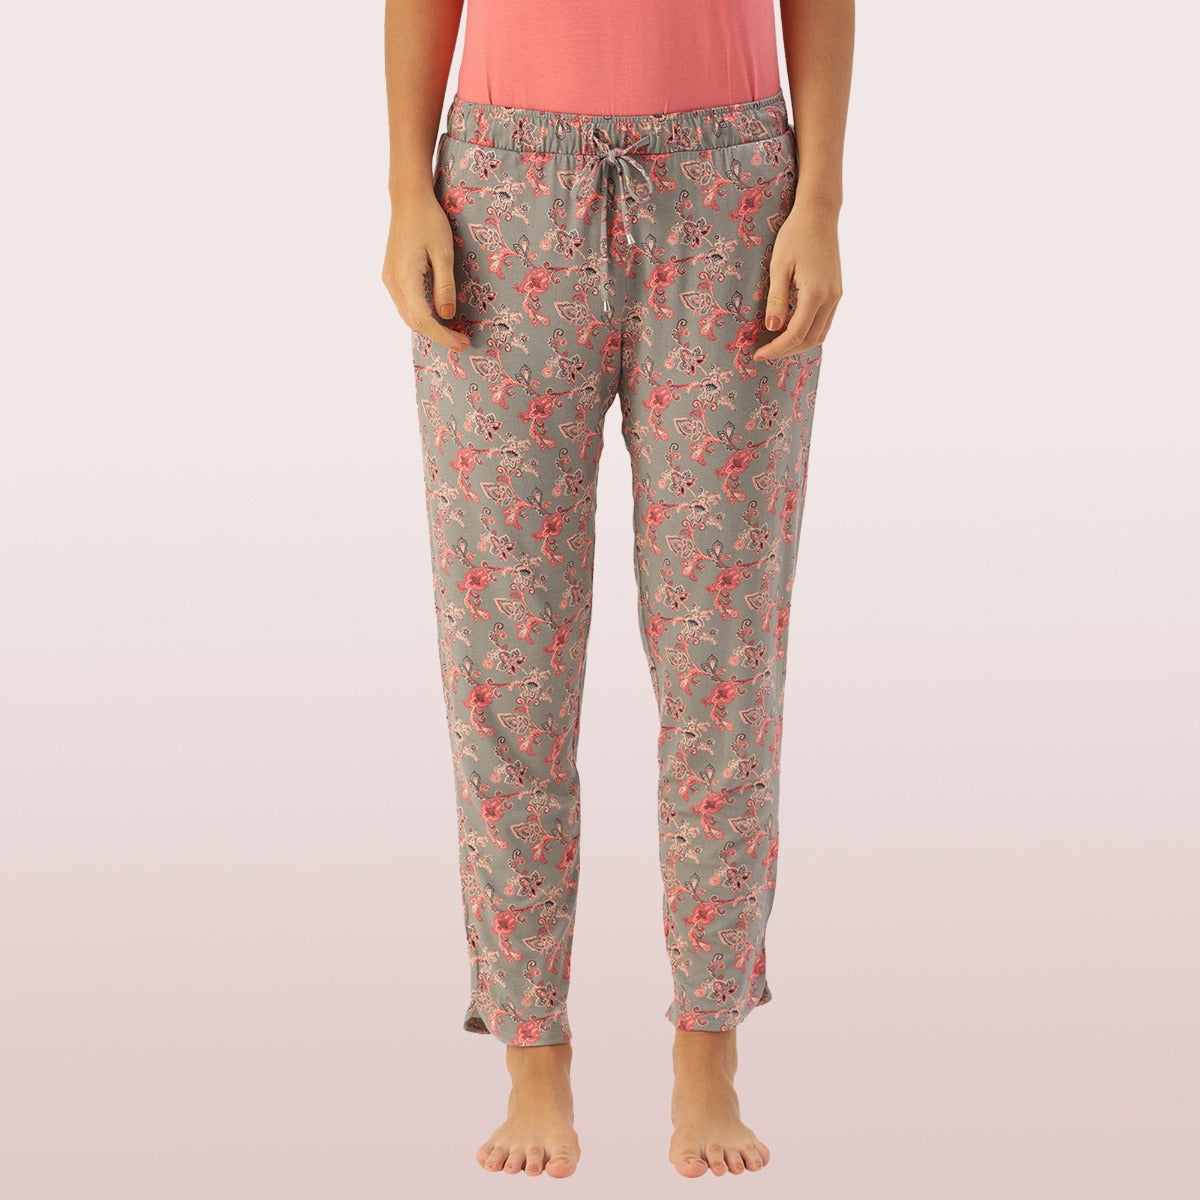 Buy Enamor Essentials E014 Women's Cotton Lounge Pants - Pink Online